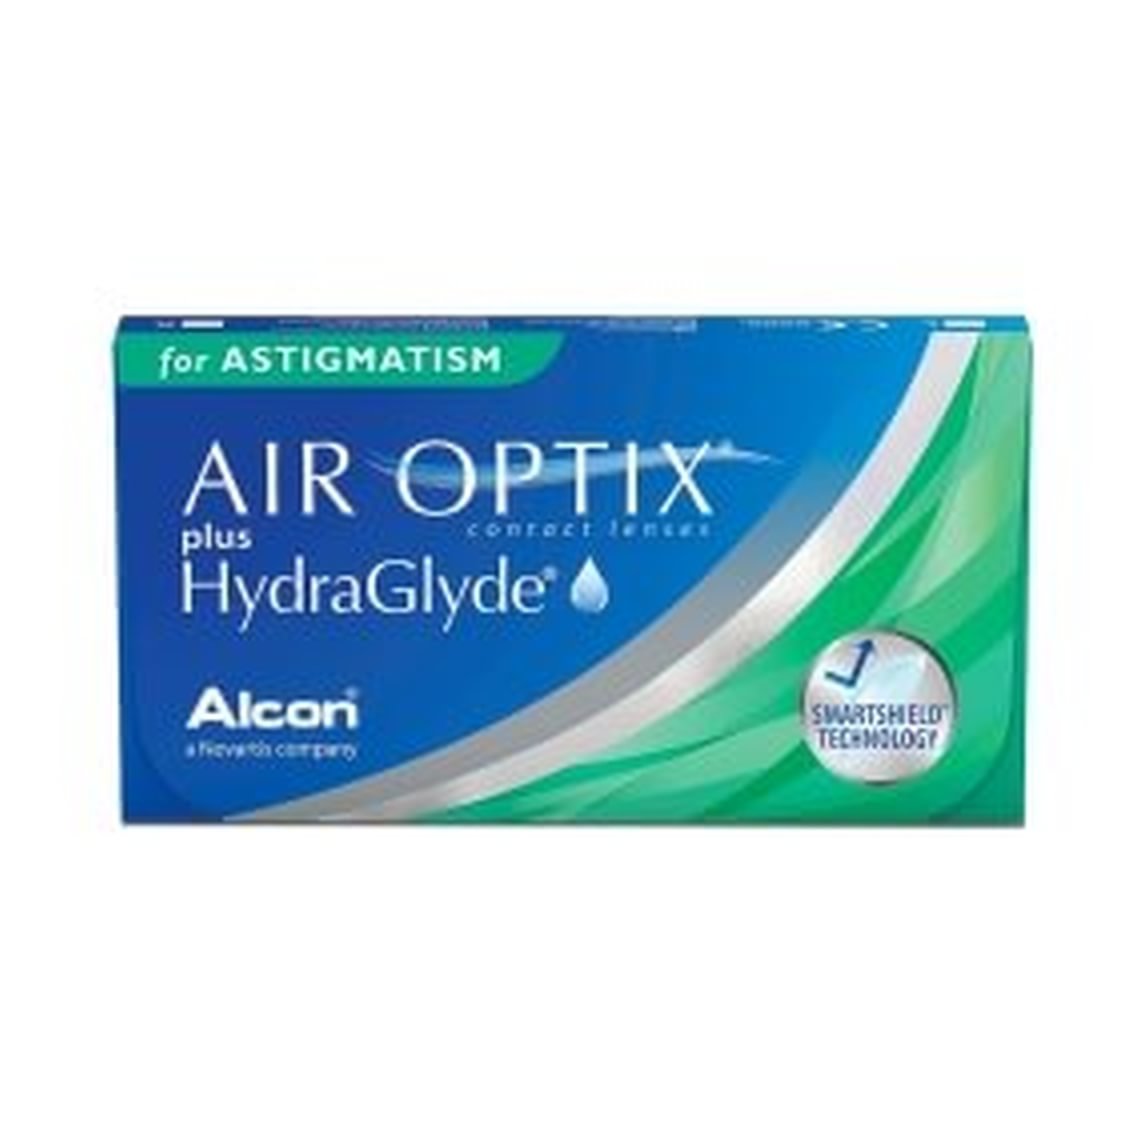 Air Optix Plus Hydraglyde For Astigmatism 6 st/box